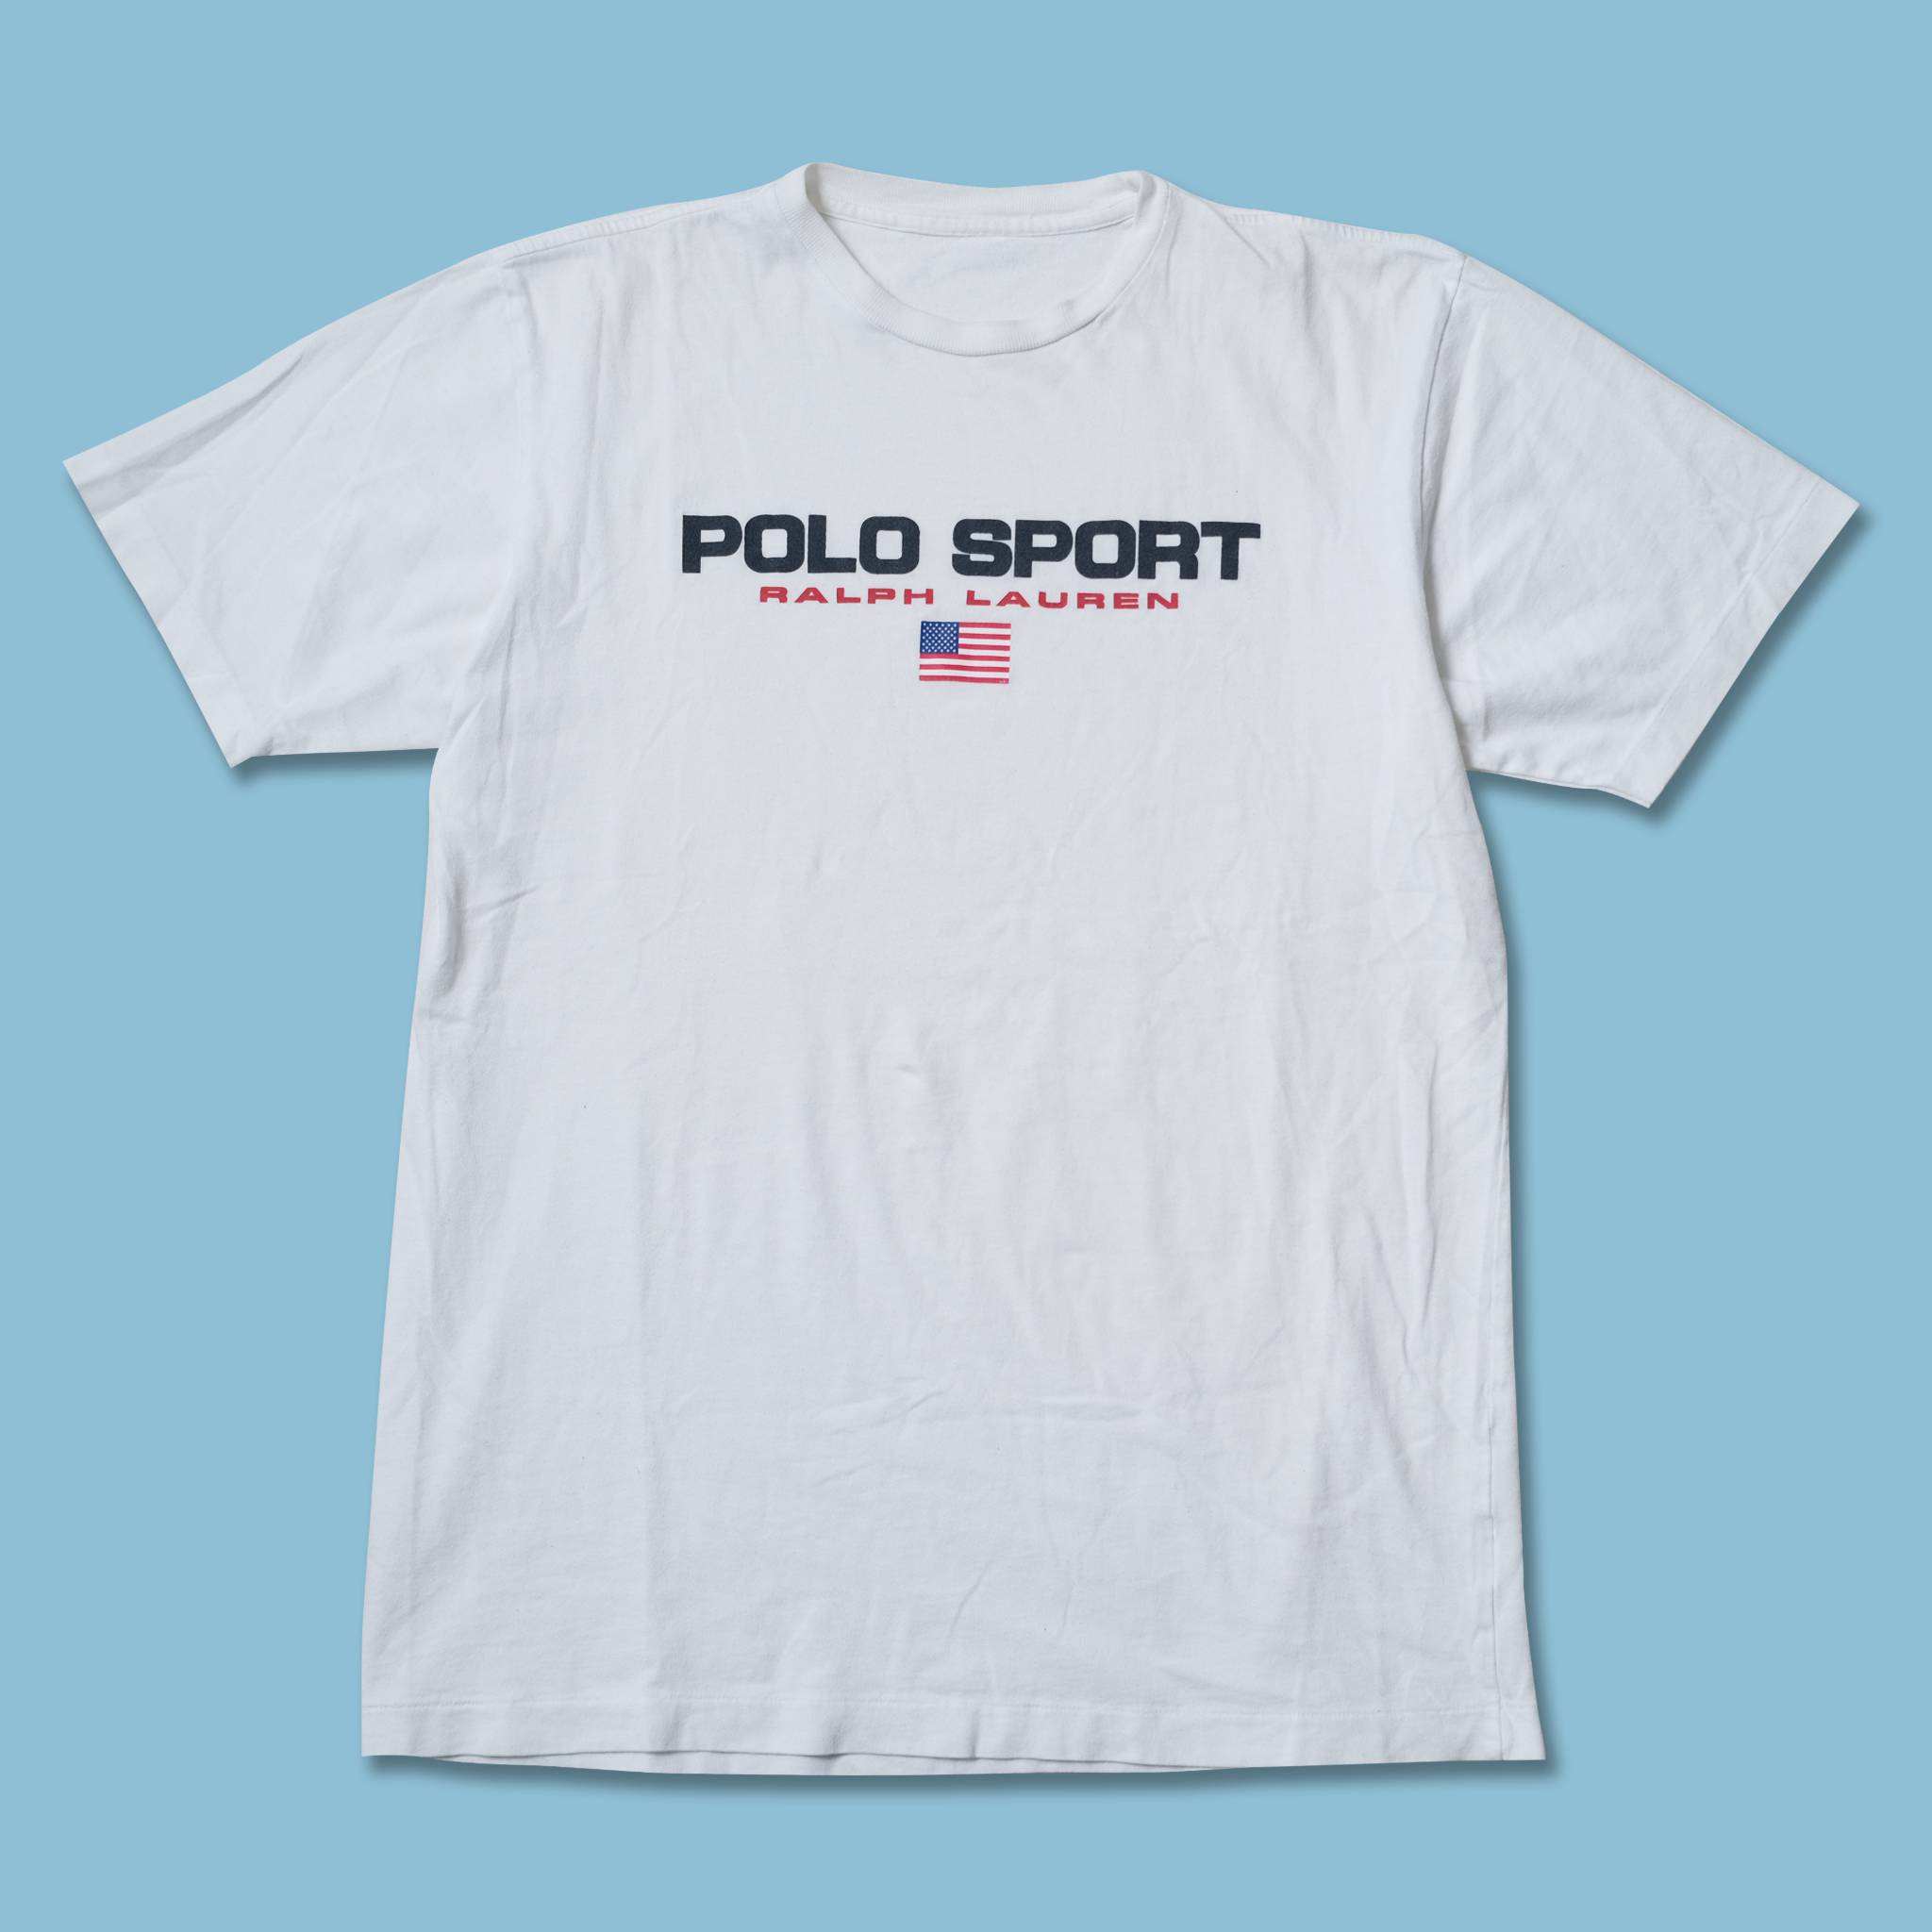 polo sport vintage t shirt